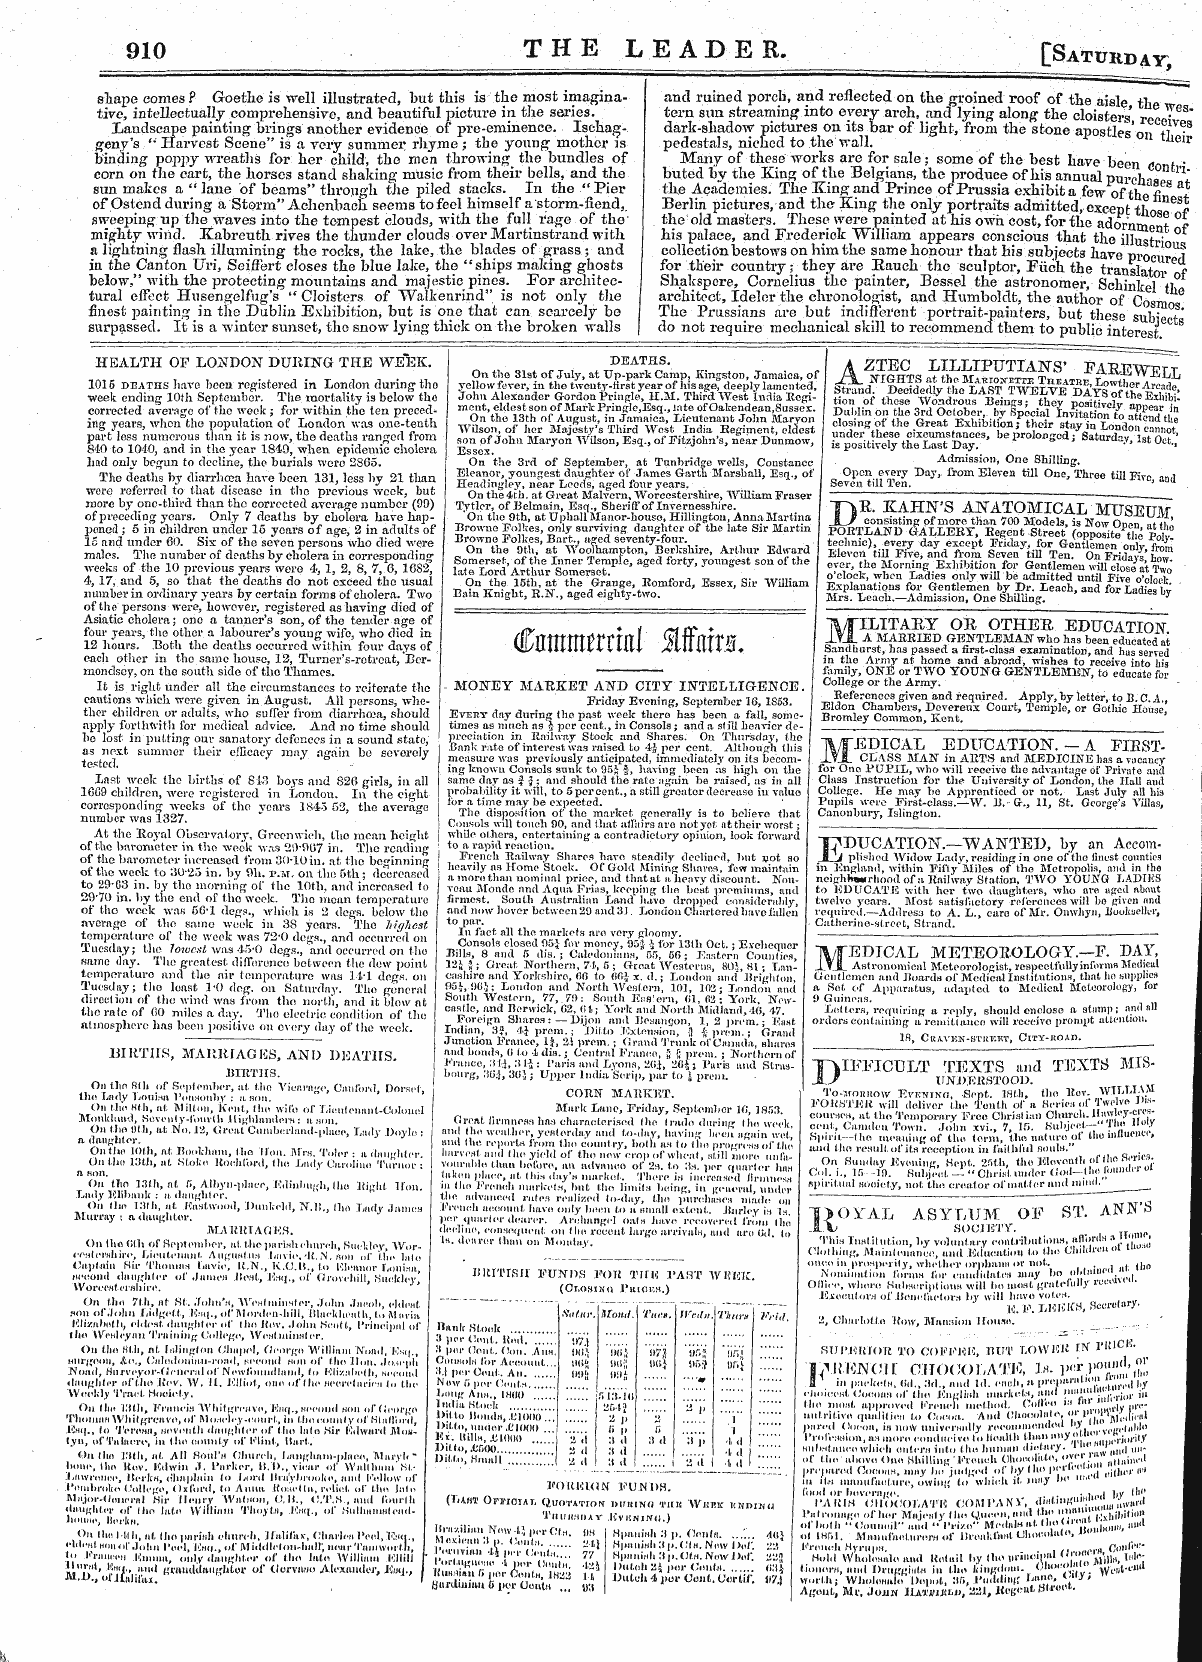 Leader (1850-1860): jS F Y, Country edition - Cnimntrrial Ilffatrs.